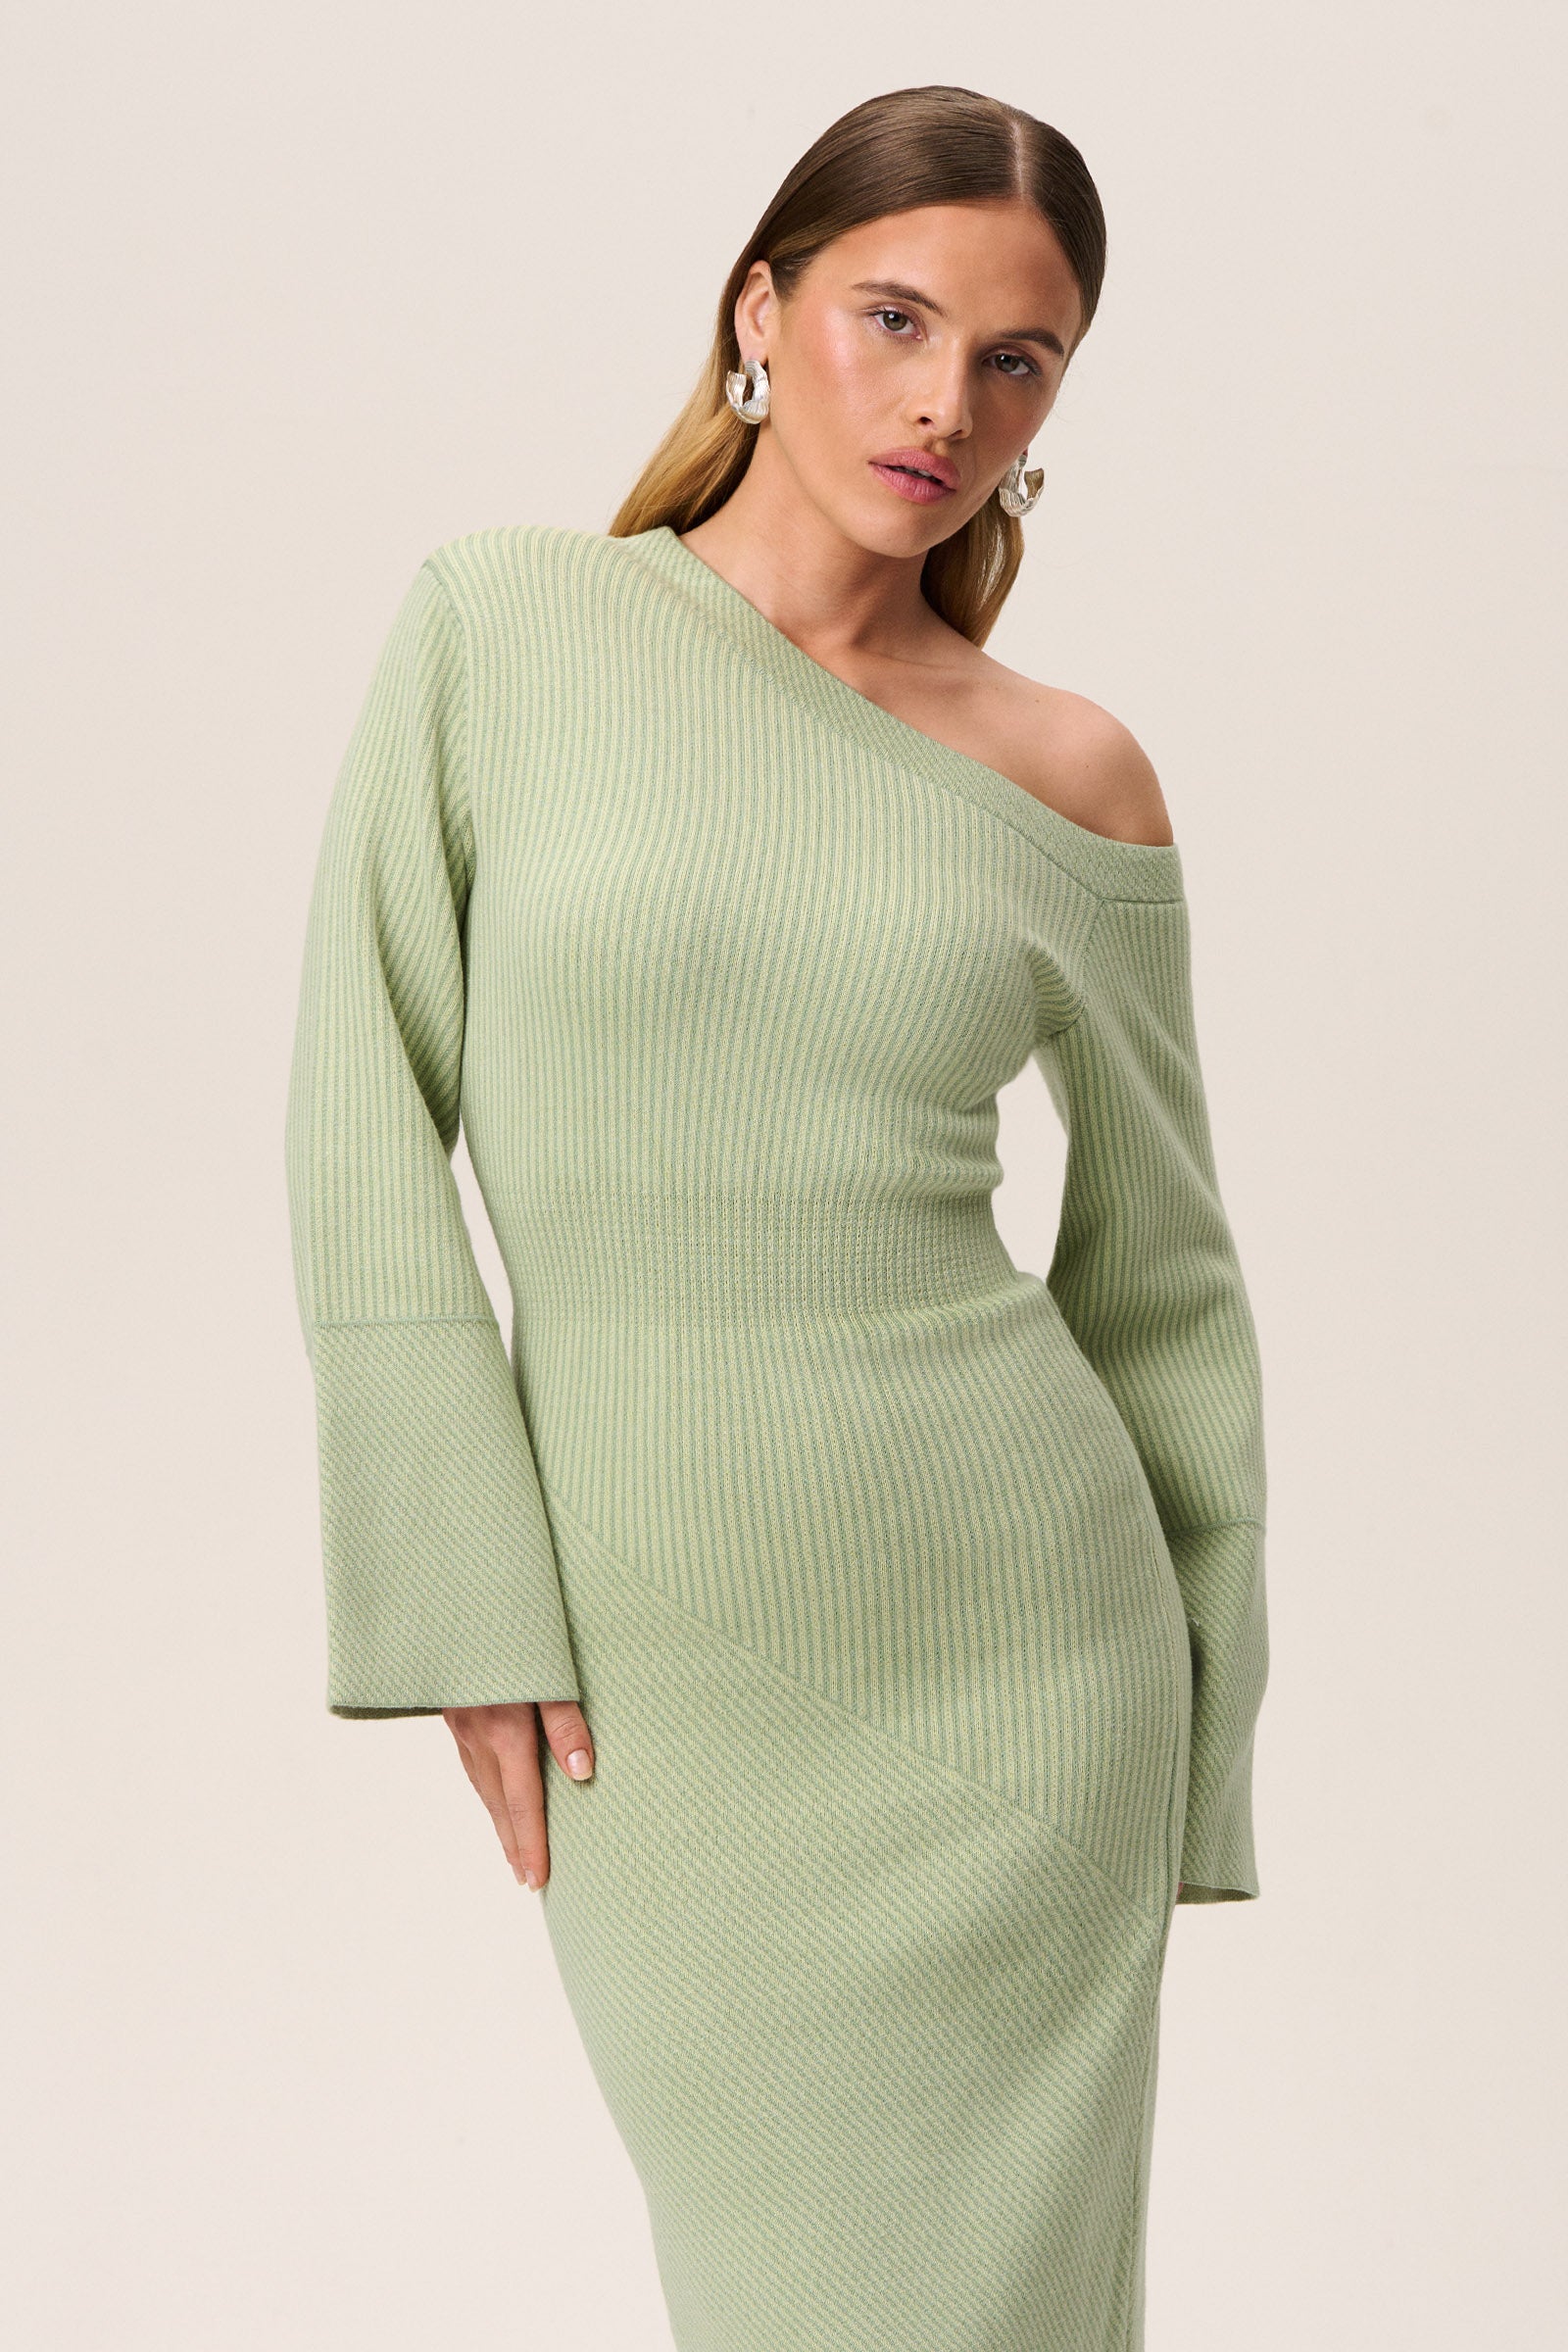 Shop women - – online dresses dresses Knitted